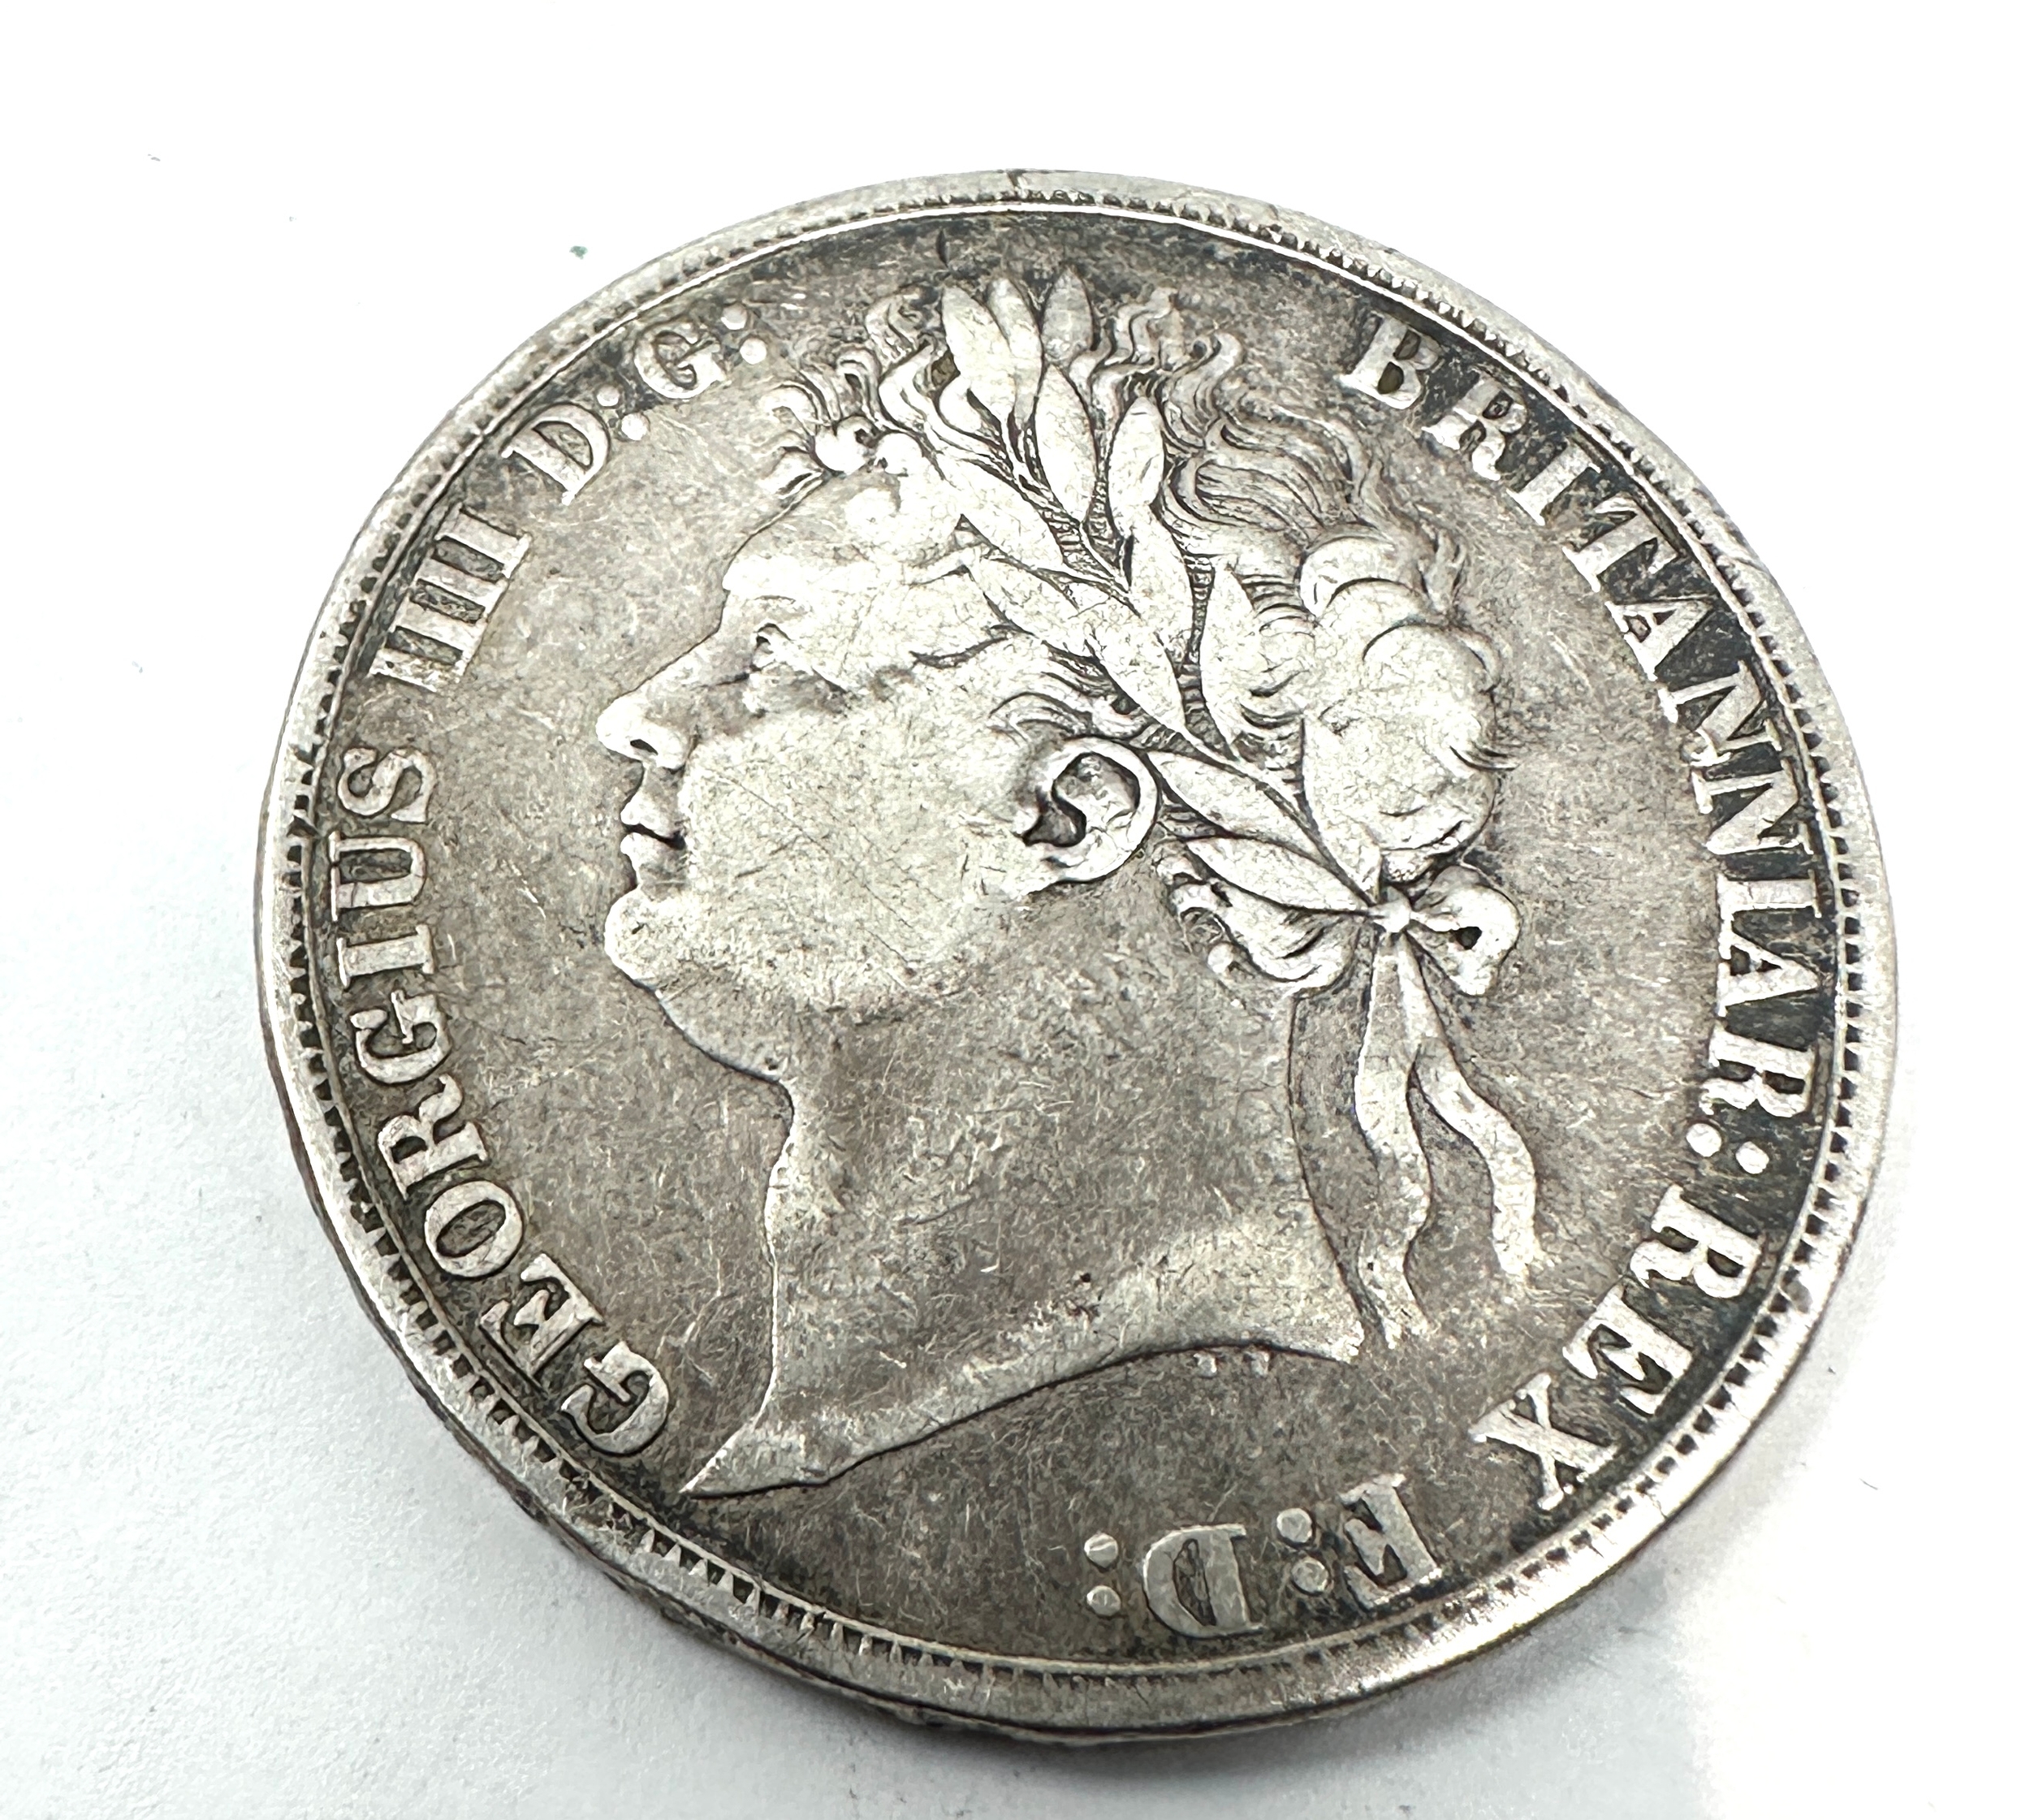 Georgian 1822 silver crown